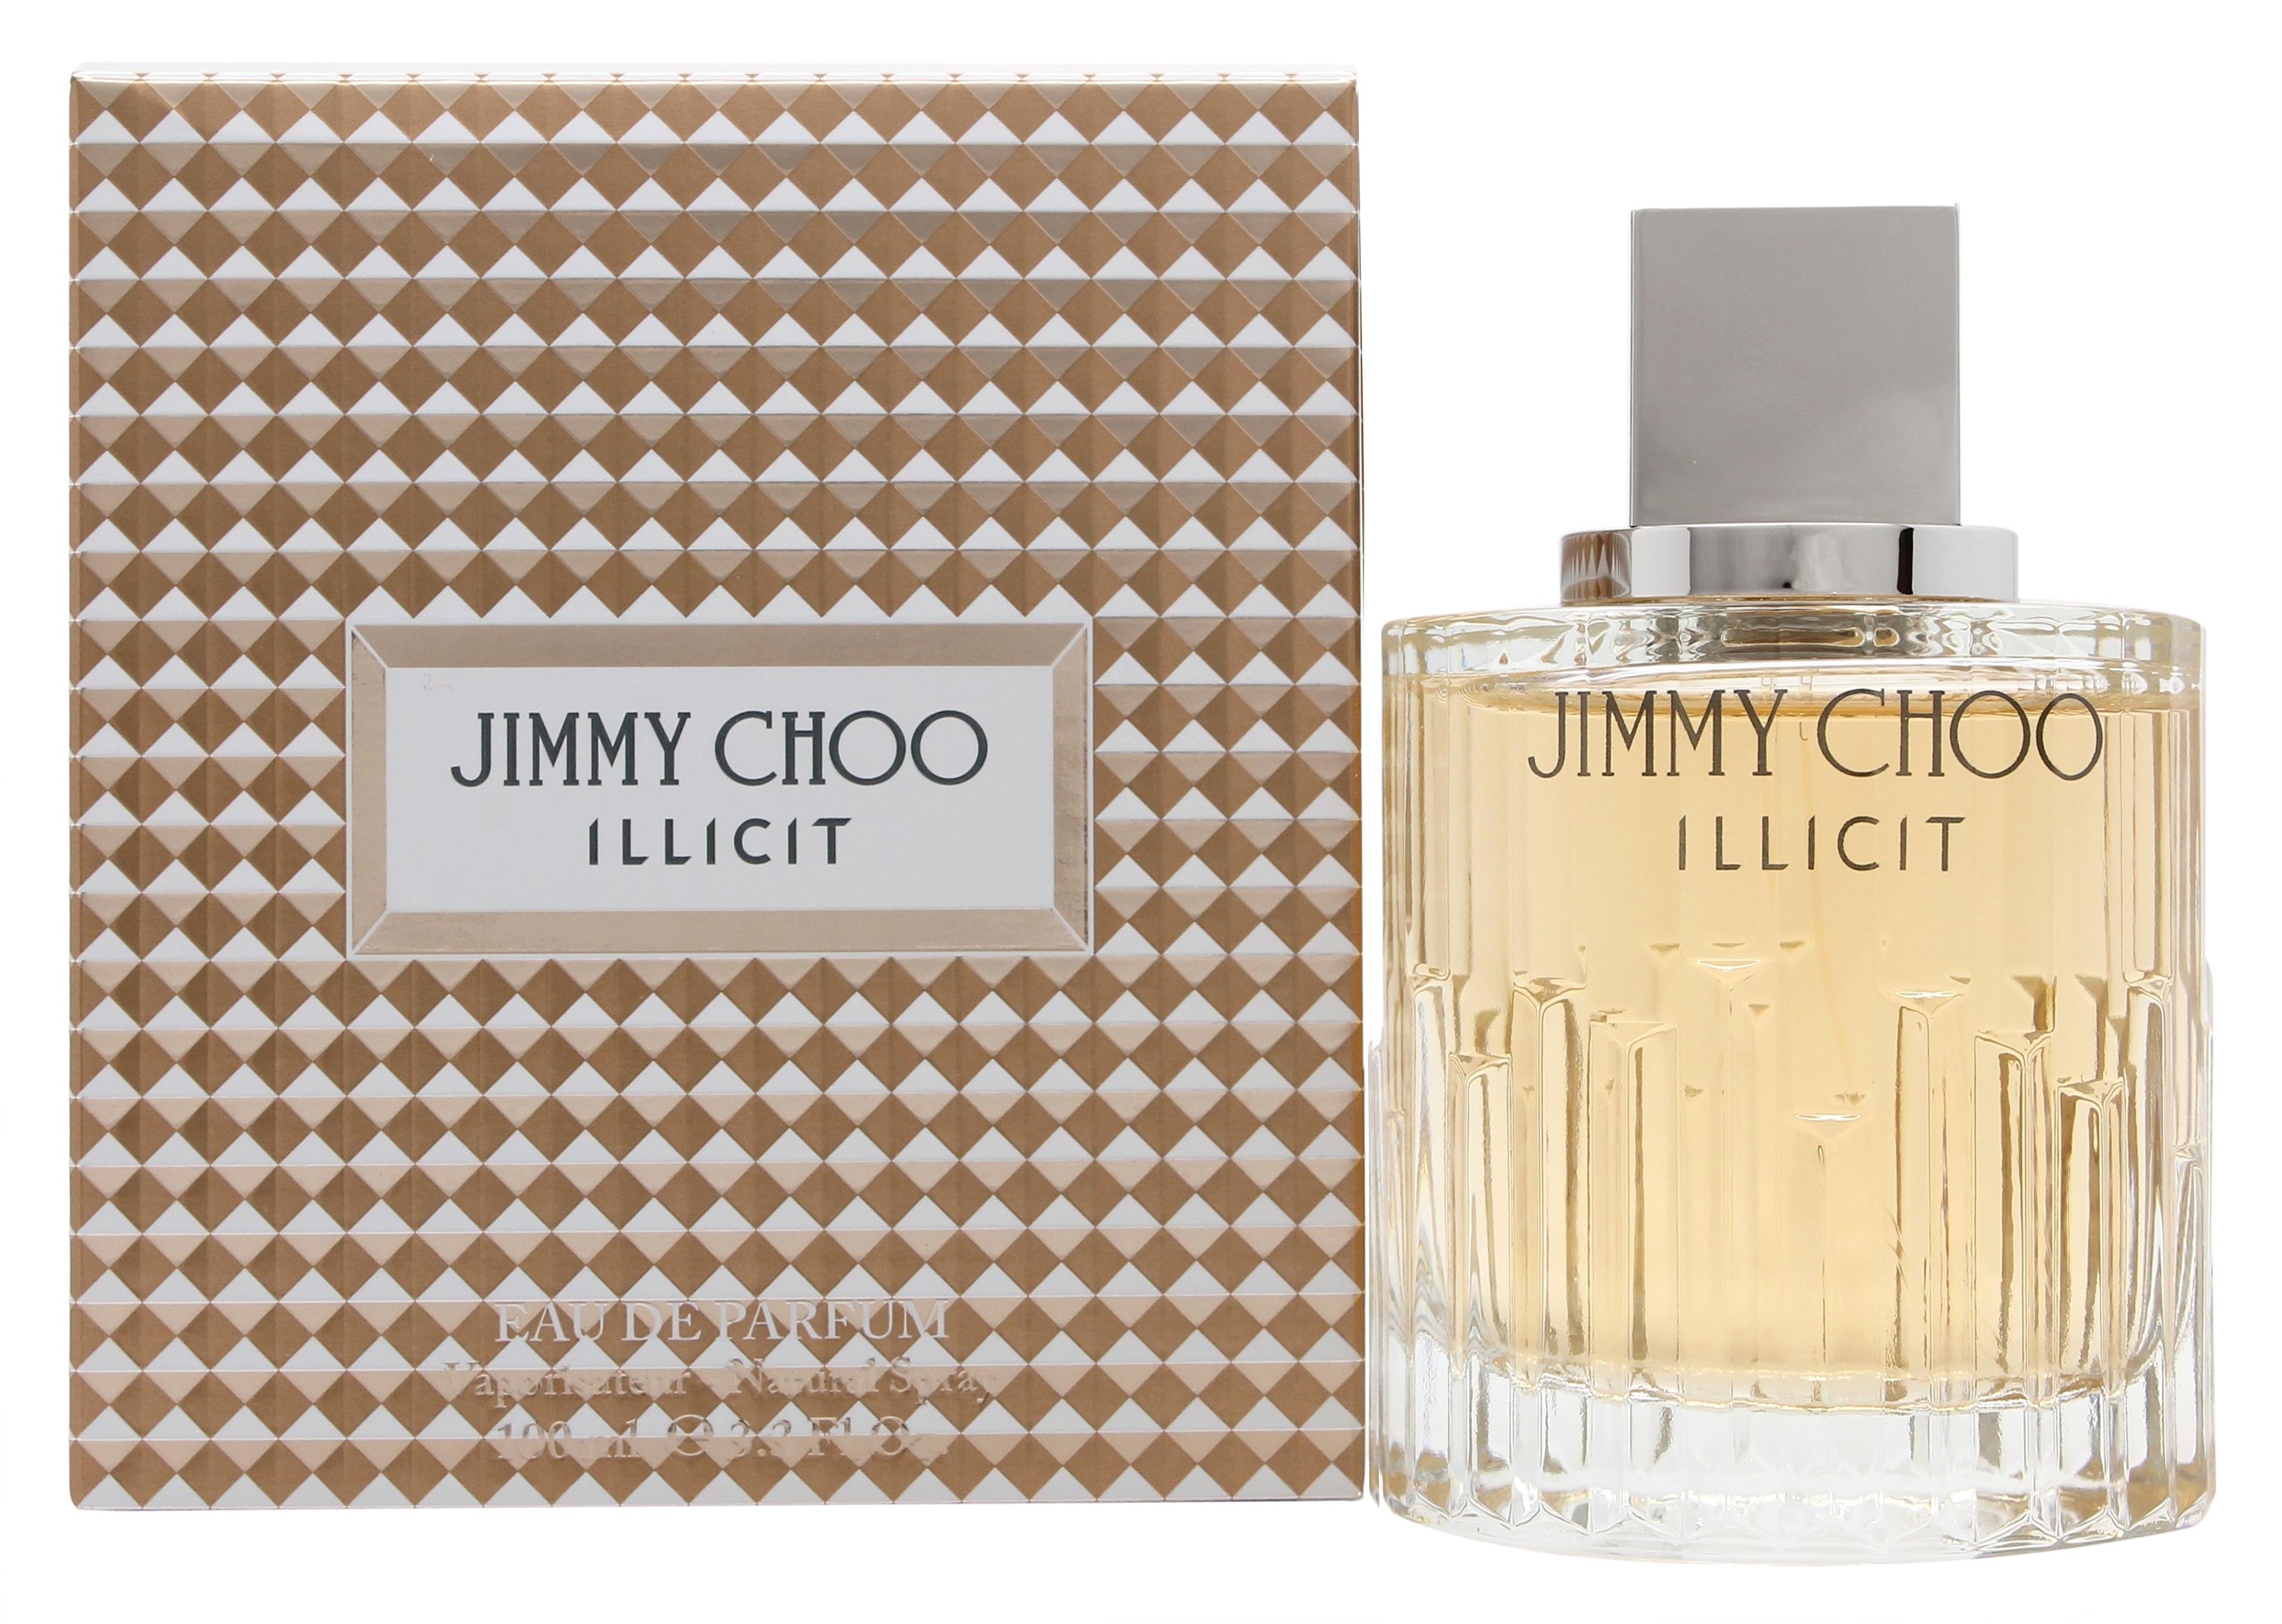 Jimmy Choo Illicit Eau de Parfum 100ml Spray